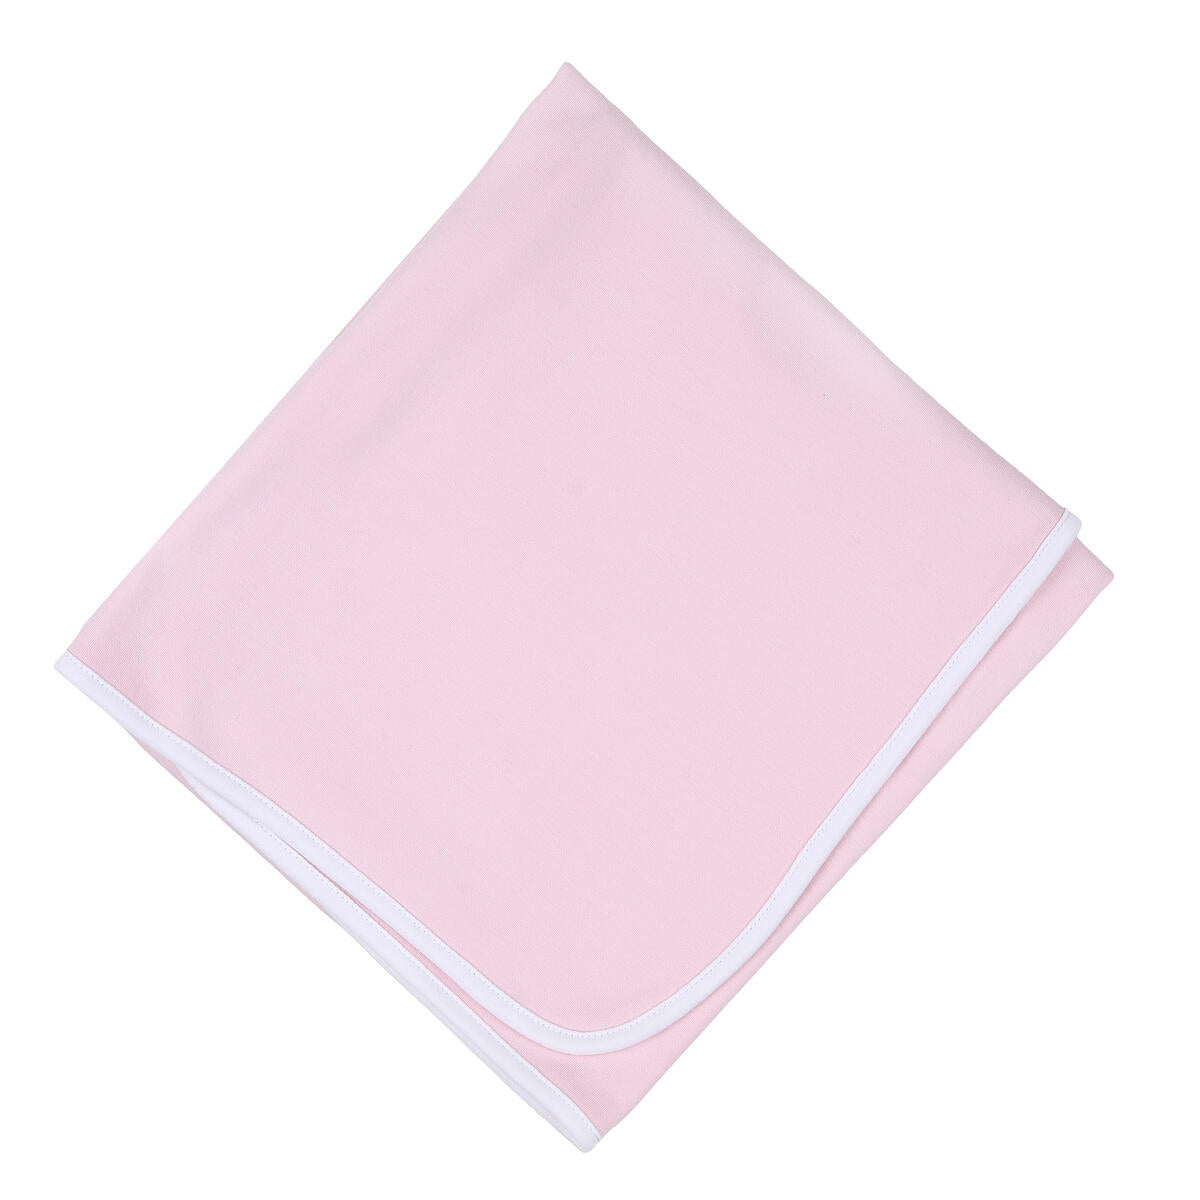 Simply Solids Receiving Blanket Pink